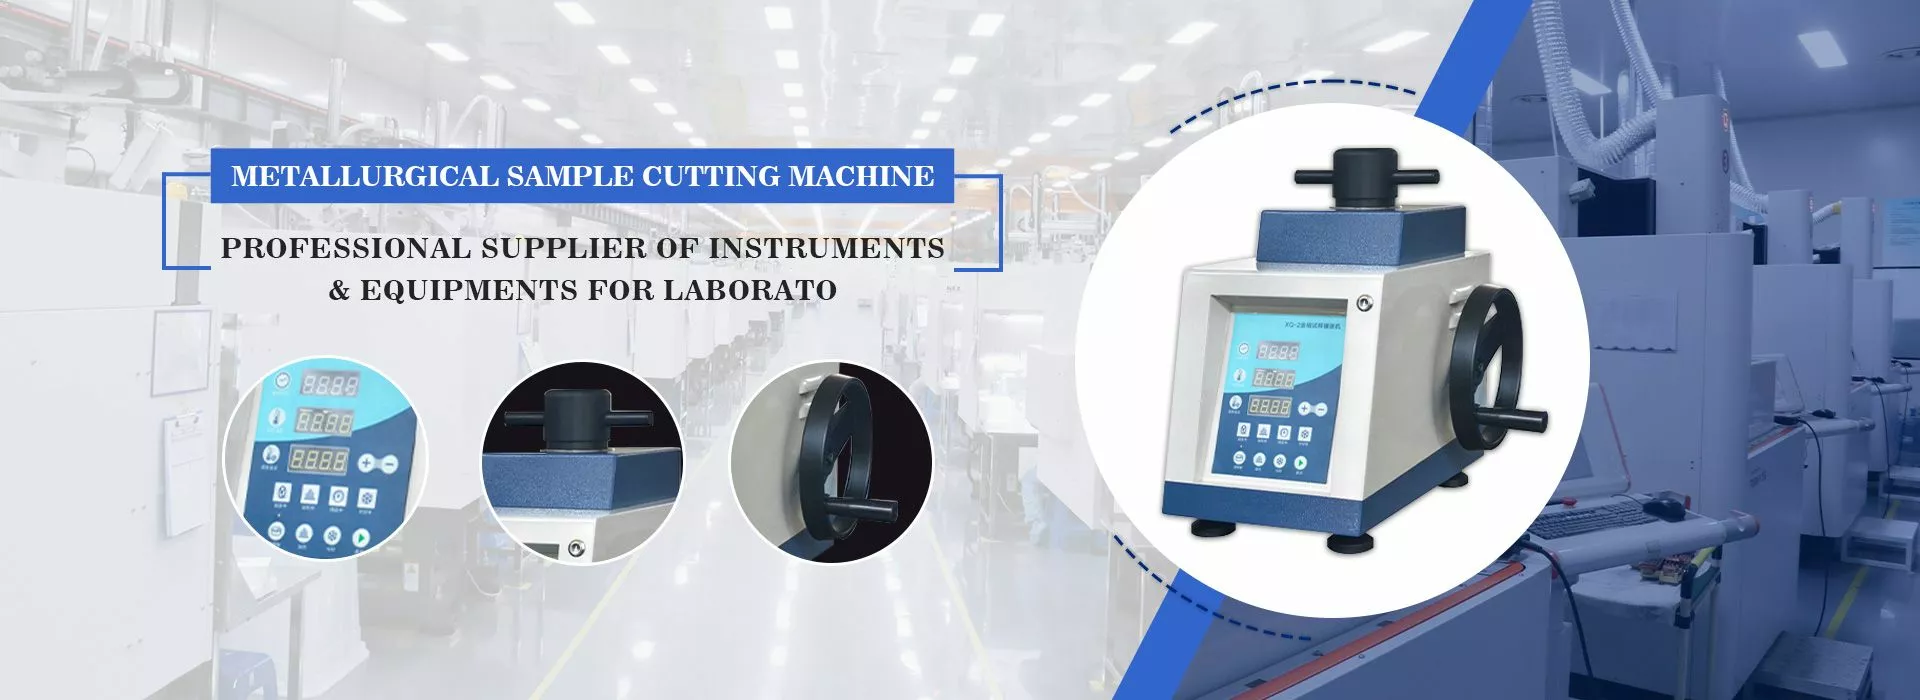 metallurgical sample cutting machine